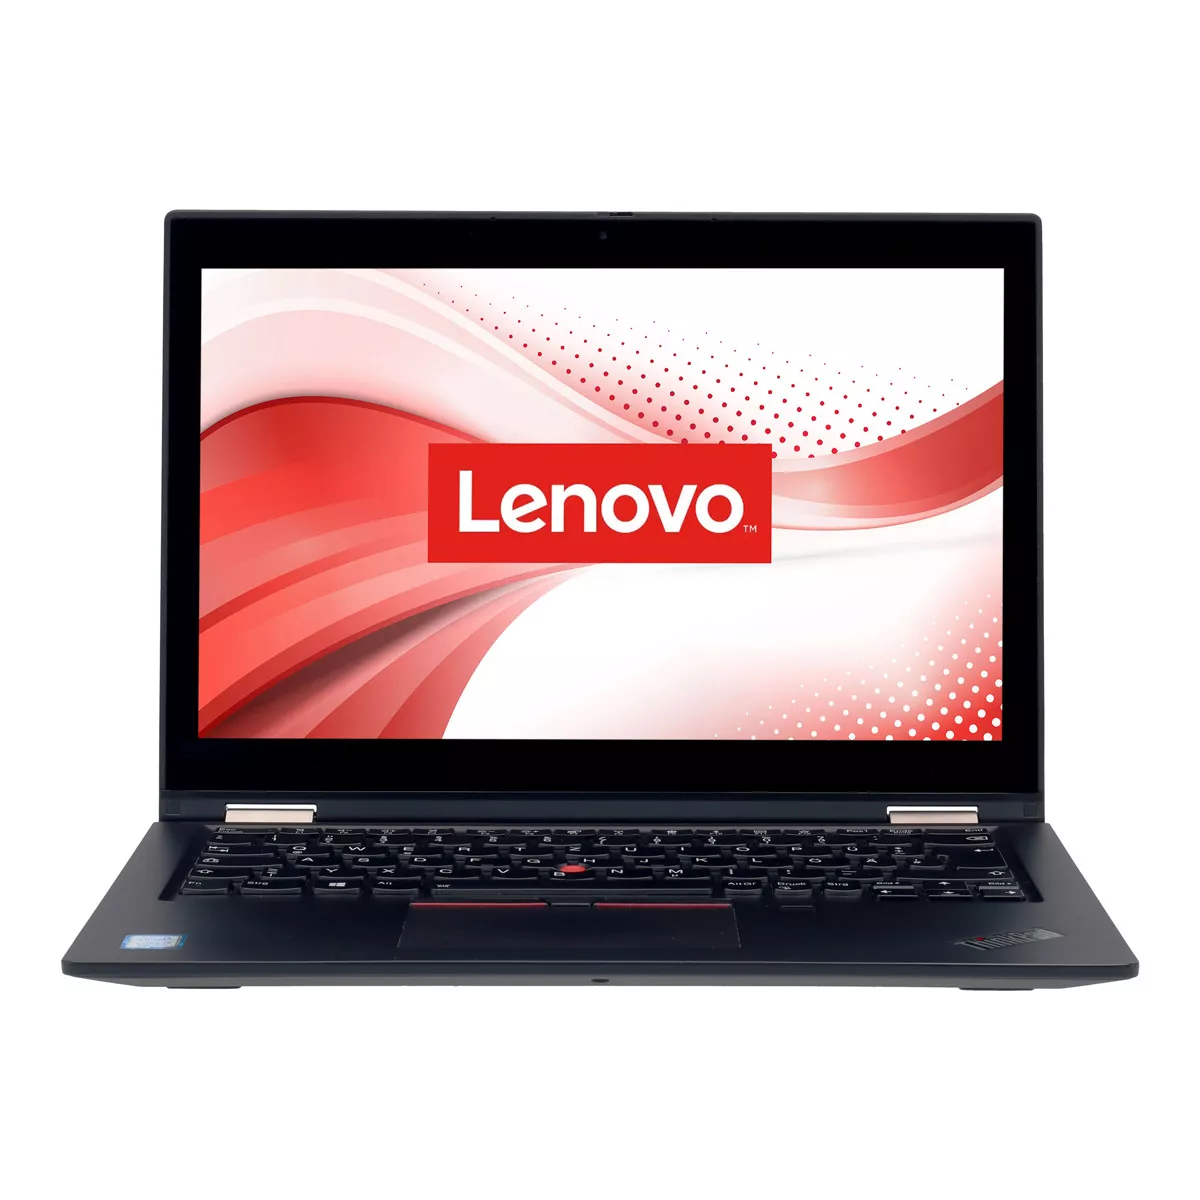 Lenovo ThinkPad X390 Core i7 8565U Touch 16 GB DDR4 500 GB M.2 nVME SSD Webcam B